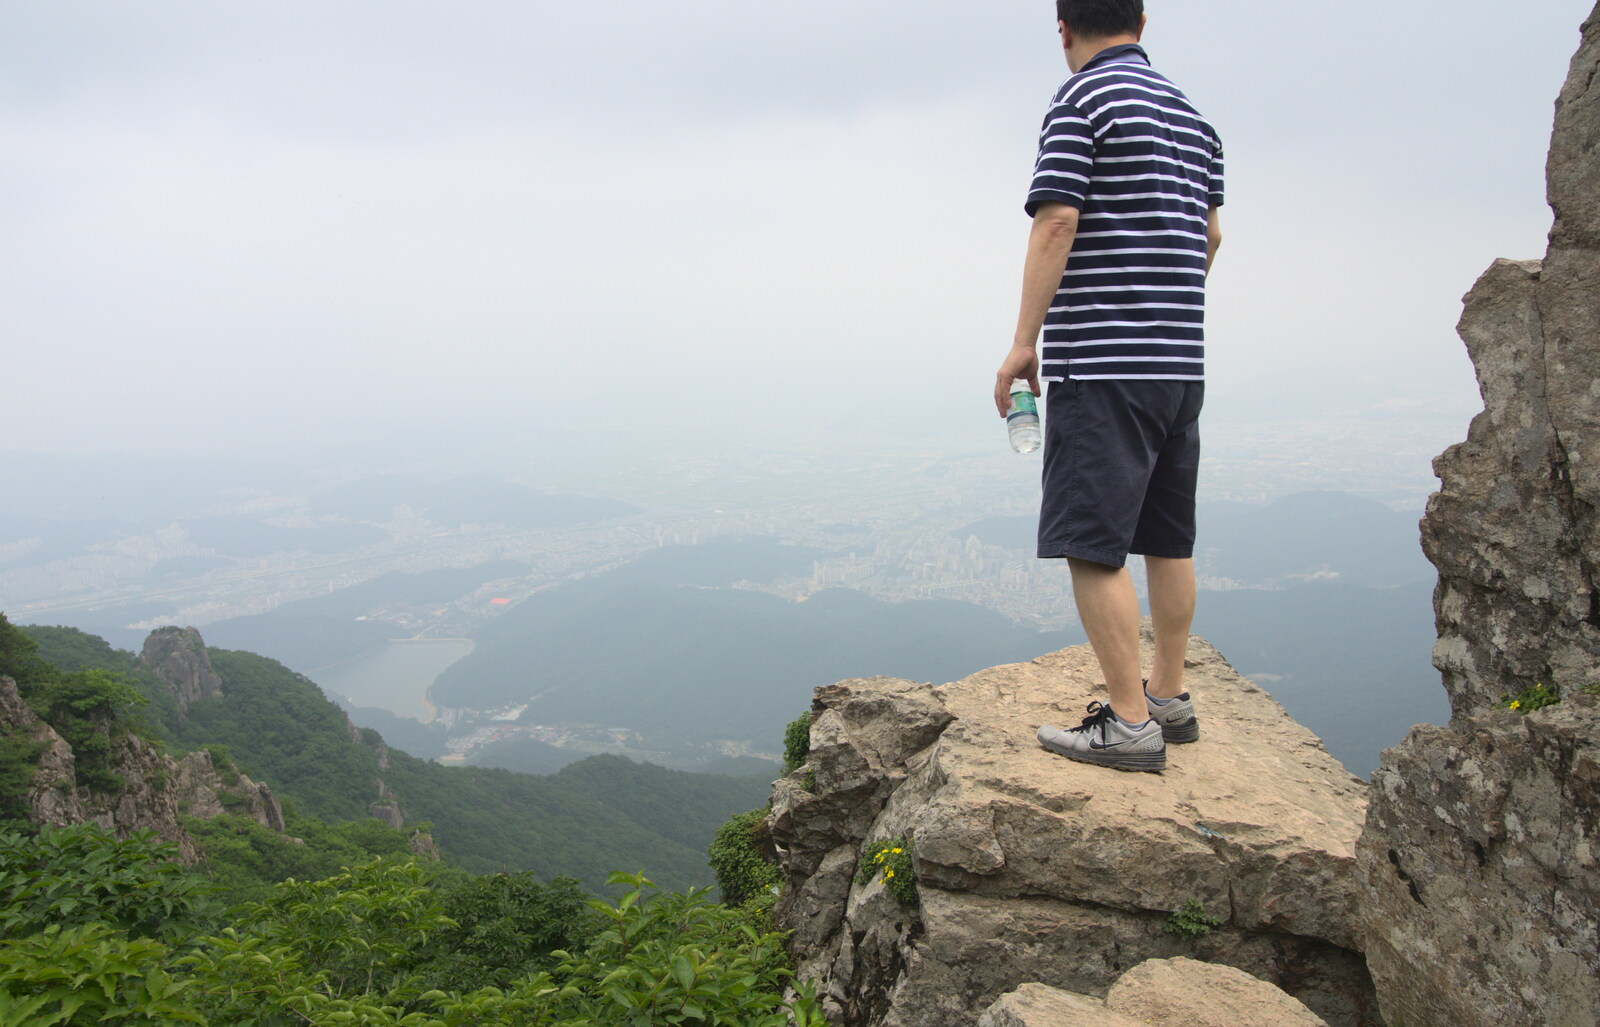 Hyosoo looks out over Gumi, one kilometre below from Working at Samsung, and Geumosan Mountain, Gumi, Gyeongsangbuk-do, Korea - 24th June 2012